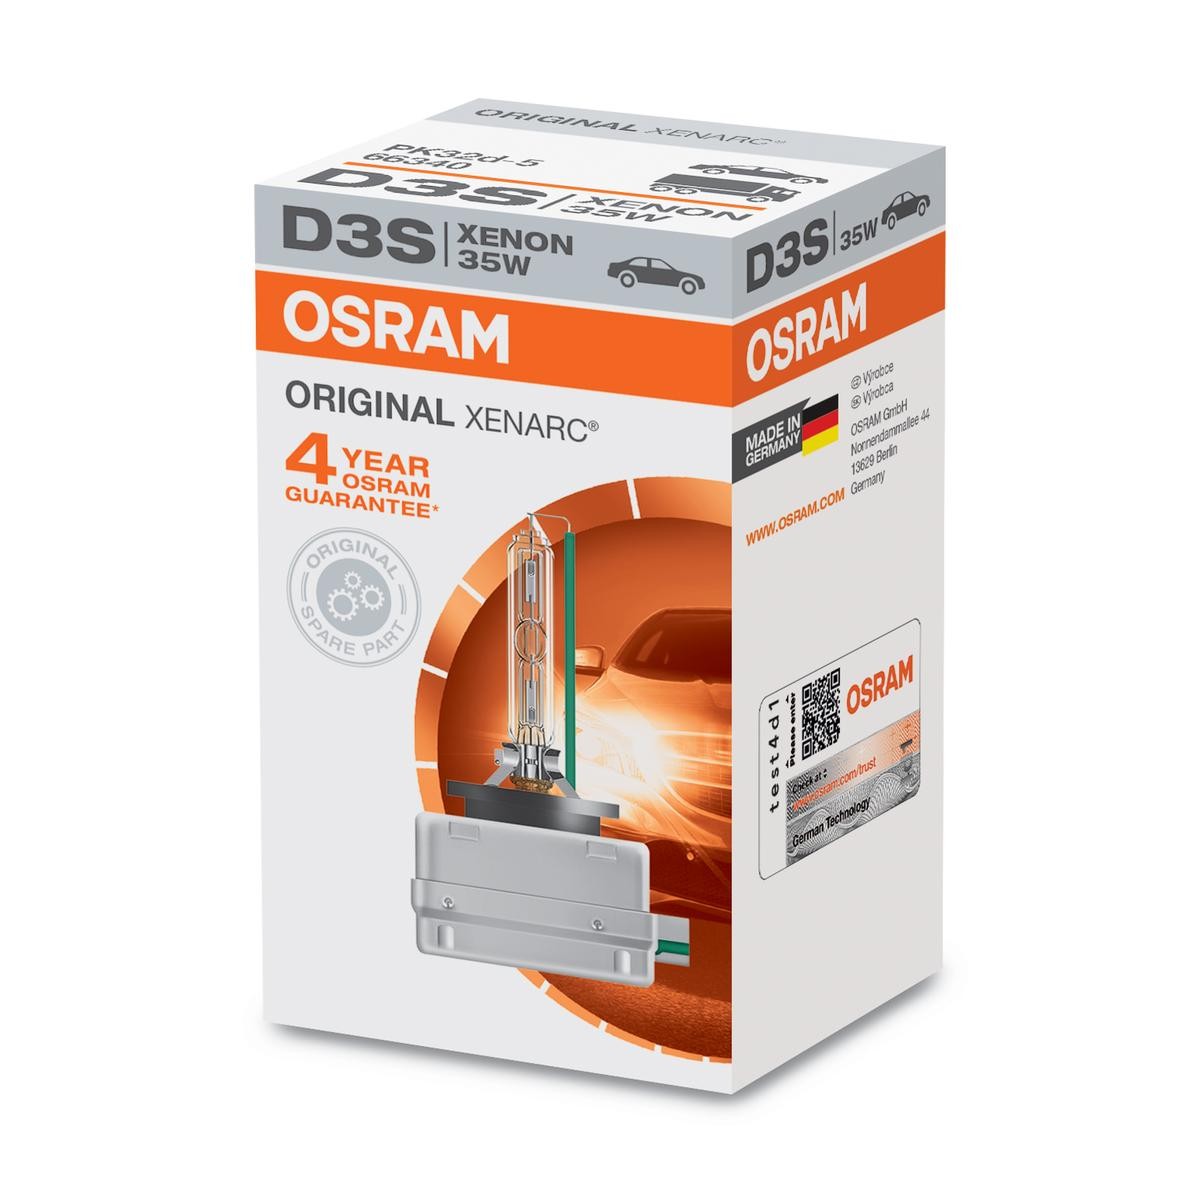 Gloeilamp grootlicht 66340 OSRAM D3S van originele kwaliteit